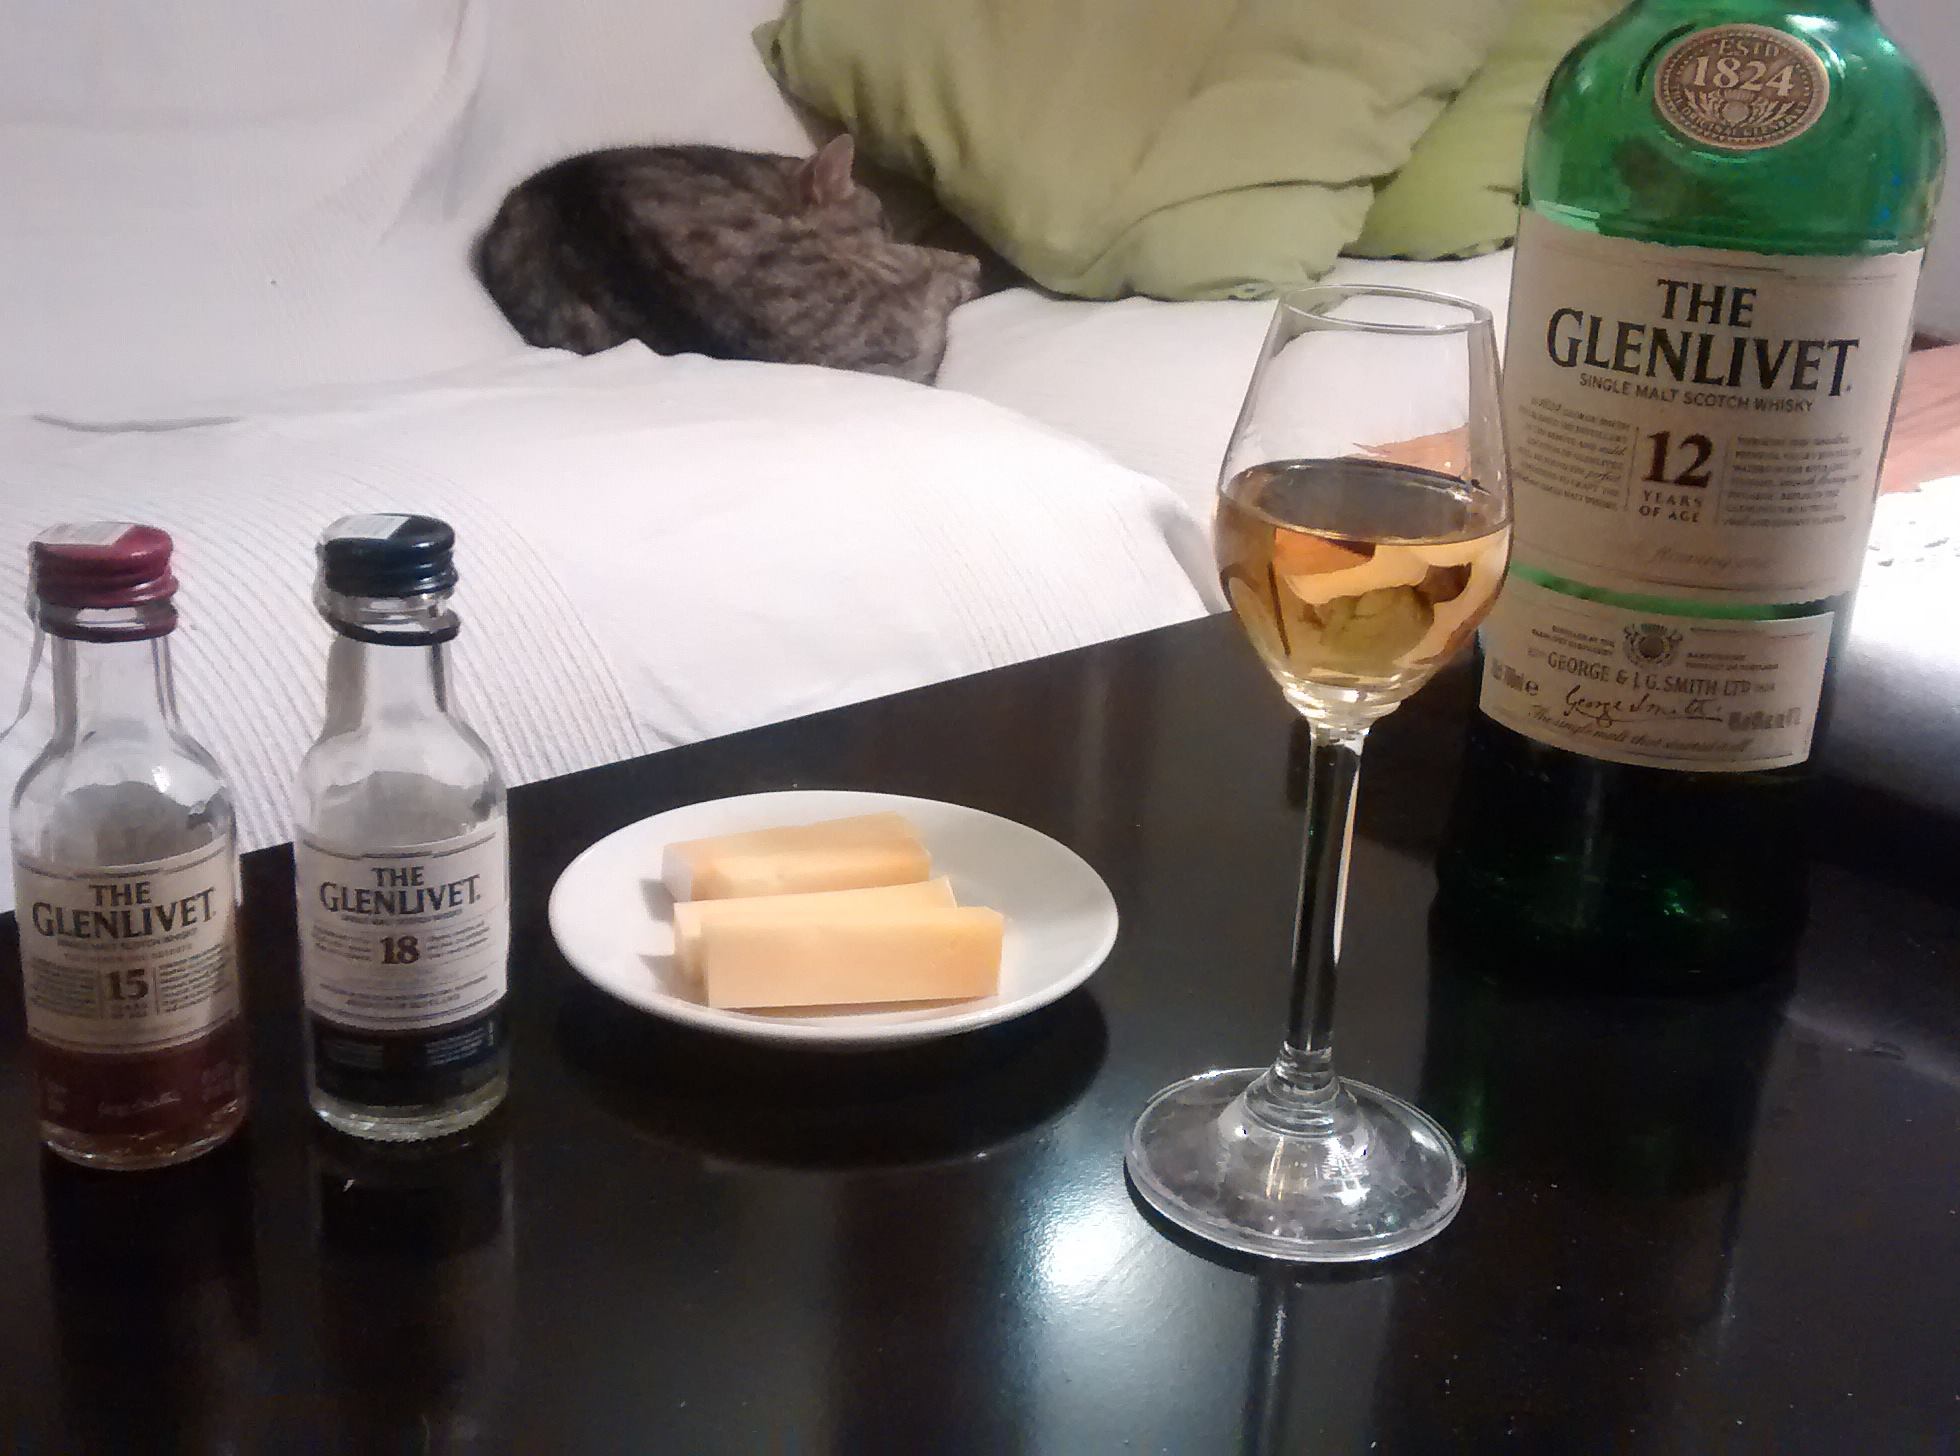 Glenlivet 12 years old single malt scotch whisky